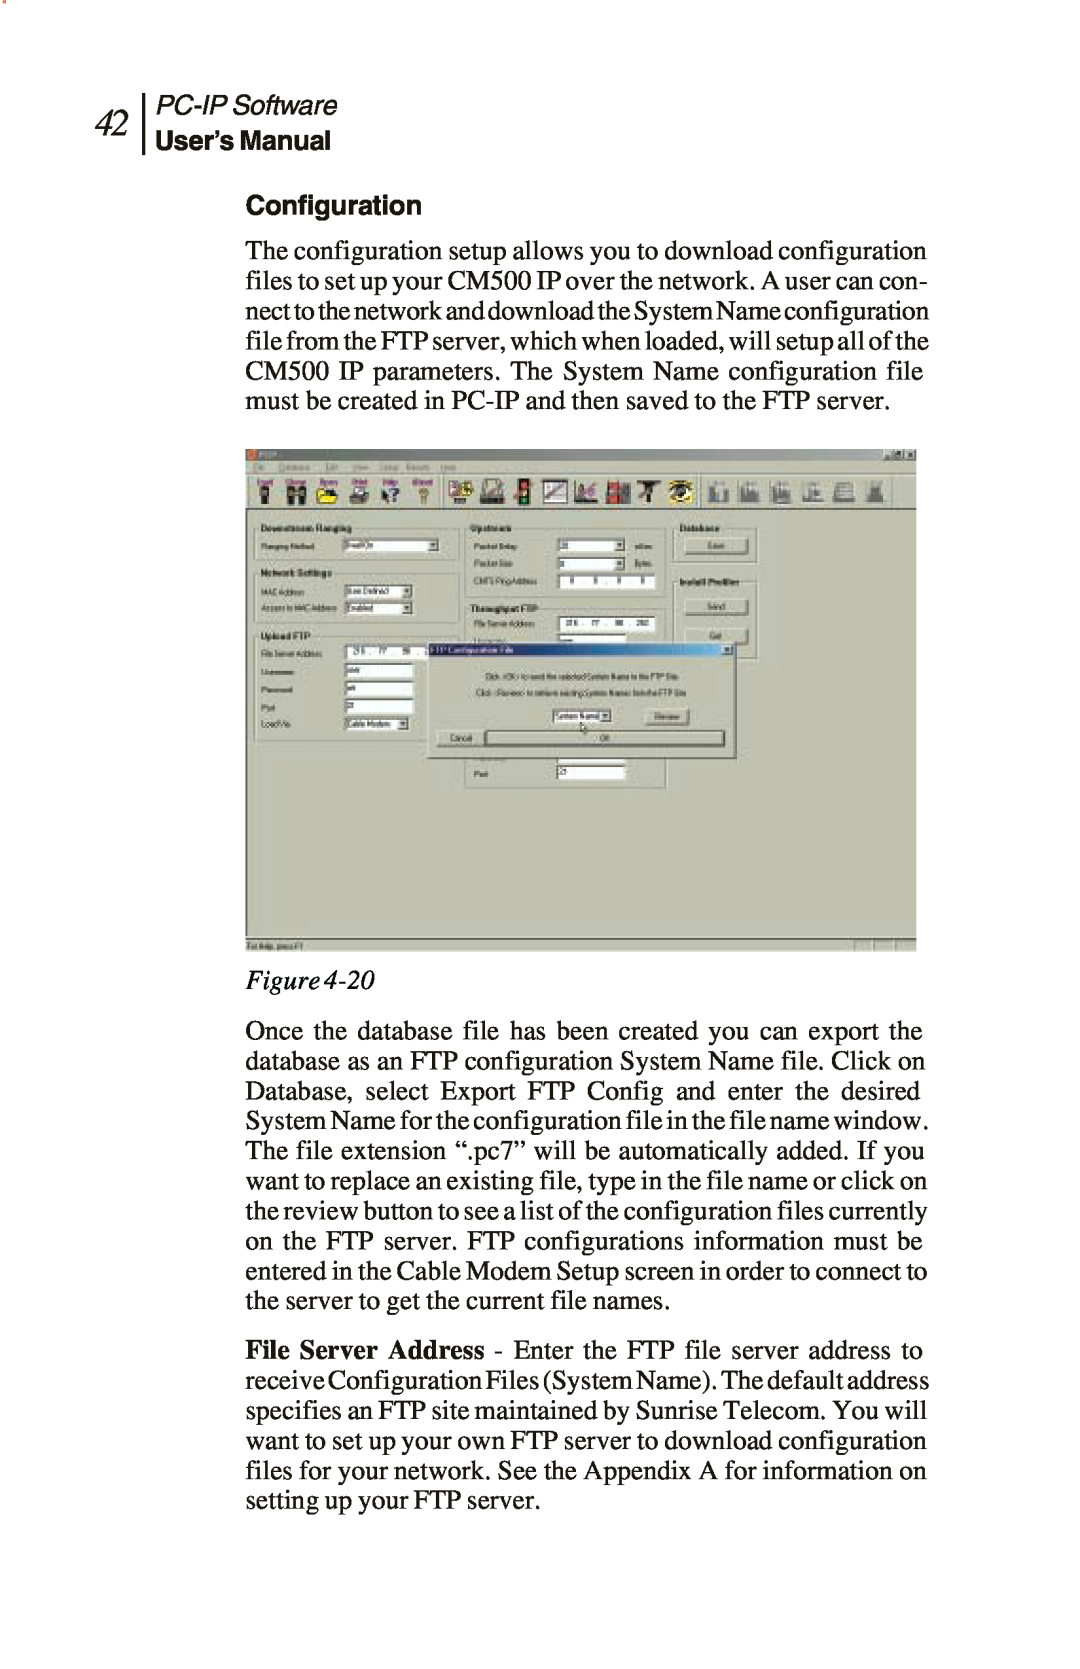 Sunrise Global CM100 IP, CM250 IP, and CM500 IP manual Configuration, PC-IPSoftware, User’s Manual, Figure 